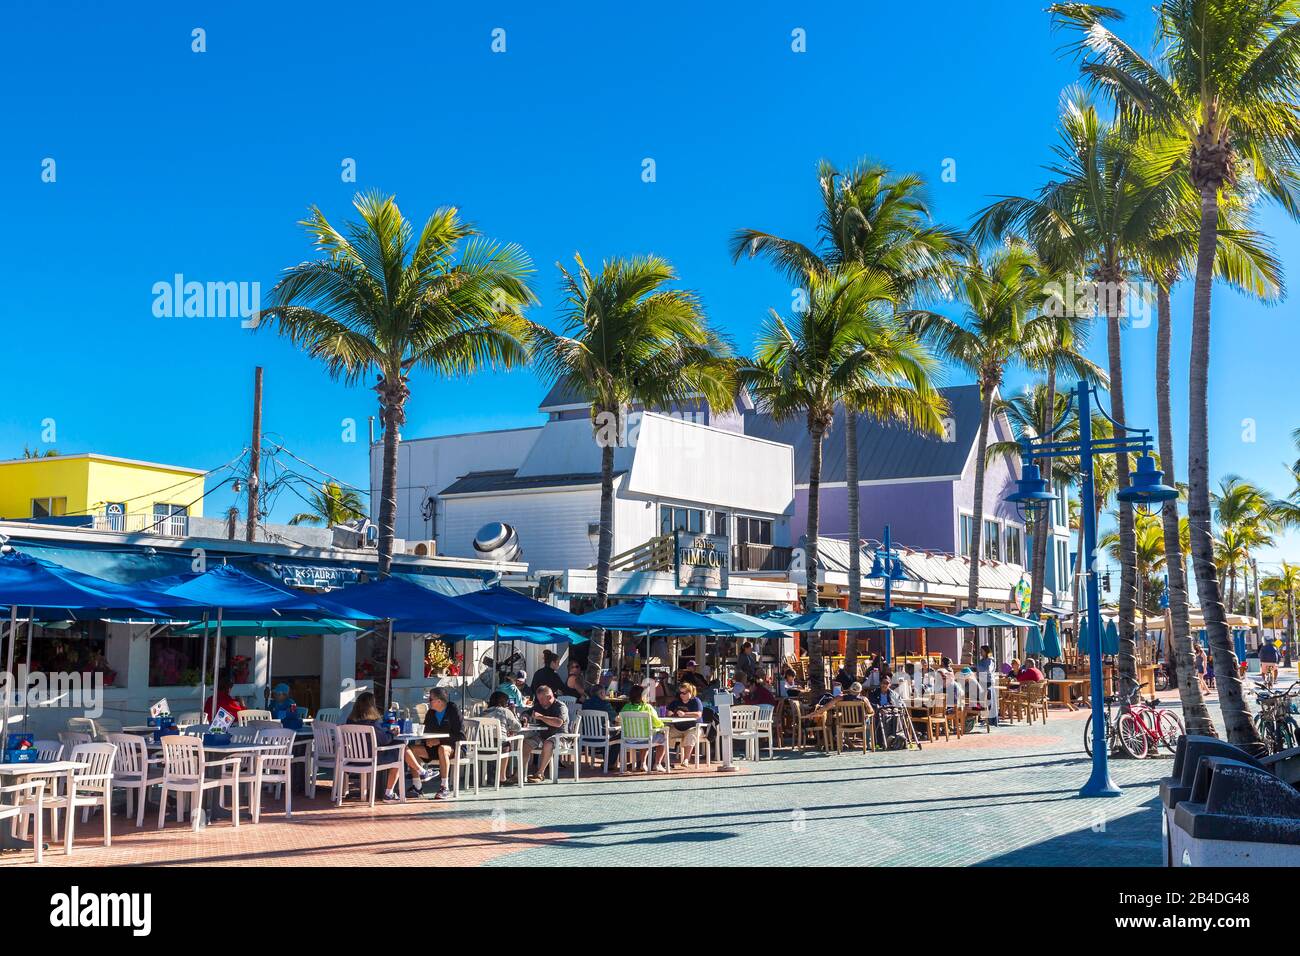 Cafés und Restaurants, San Carlos Blvd, Fort Myers, Florida, USA, Nordamerika Stock Photo